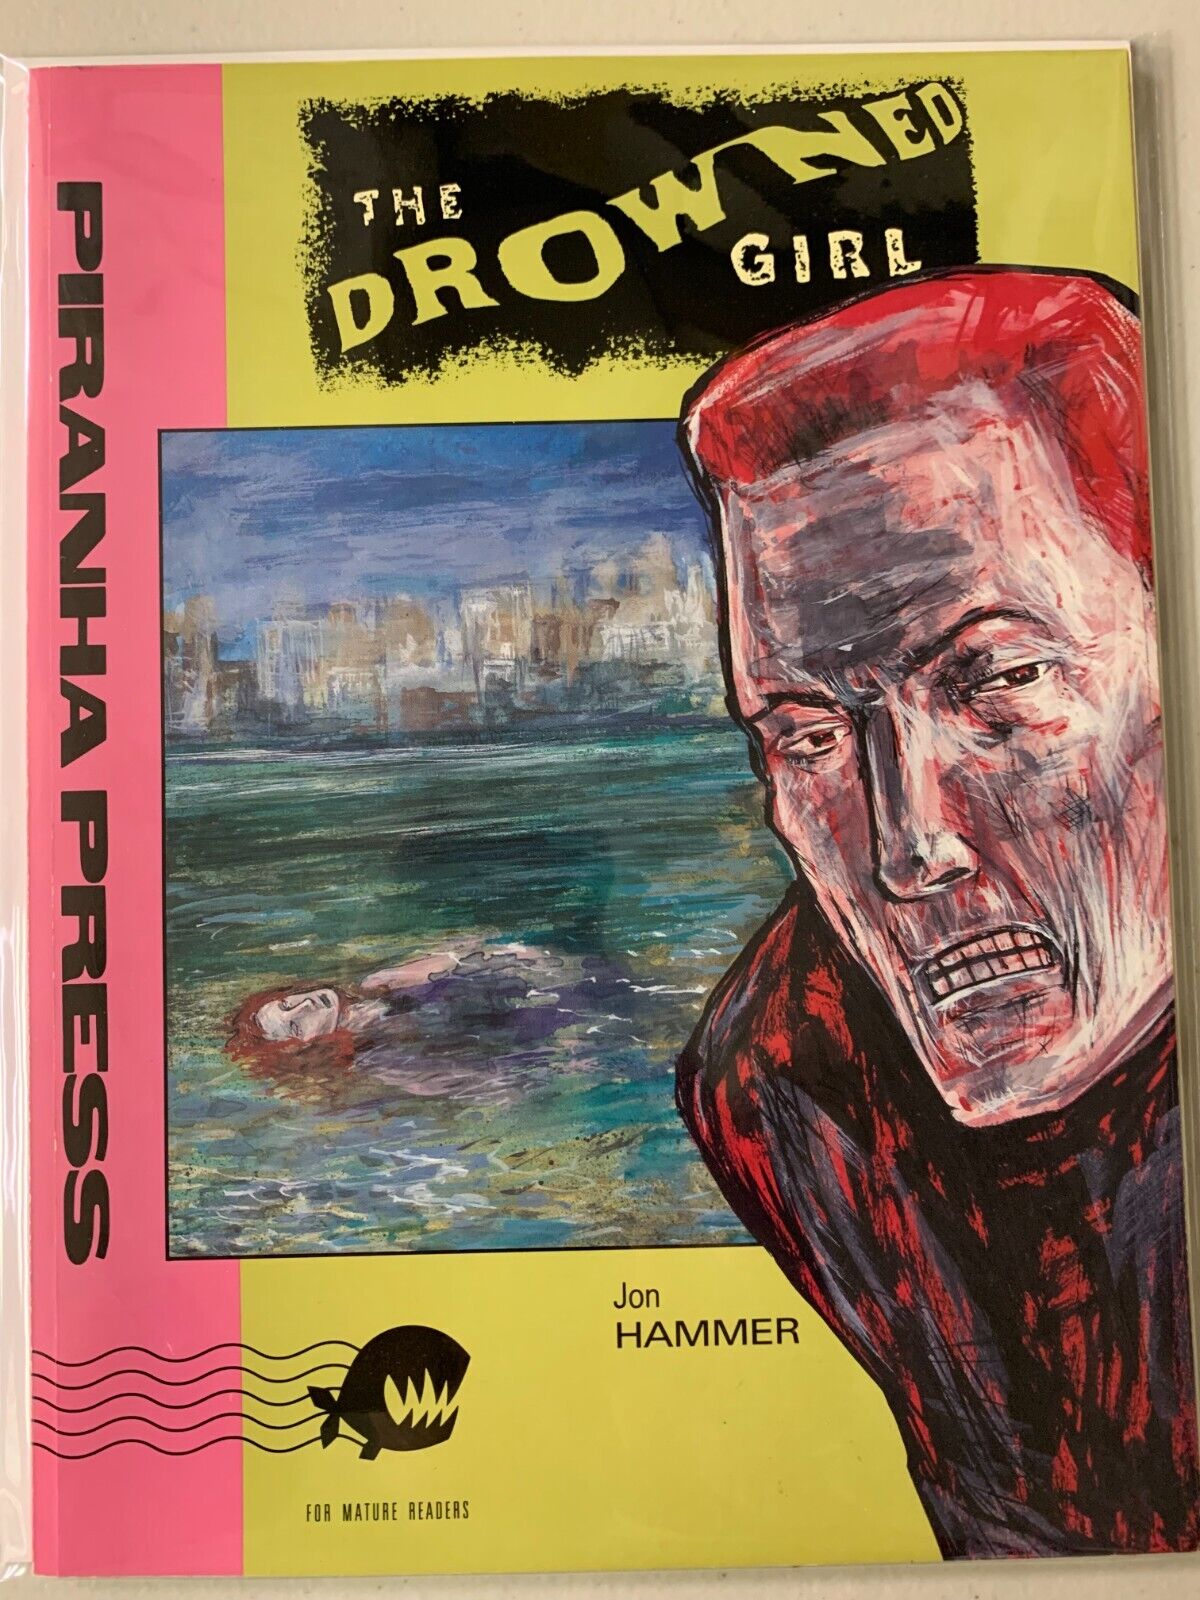 Drowned Girl #1 GN Piranha Press 7.0 (1990)